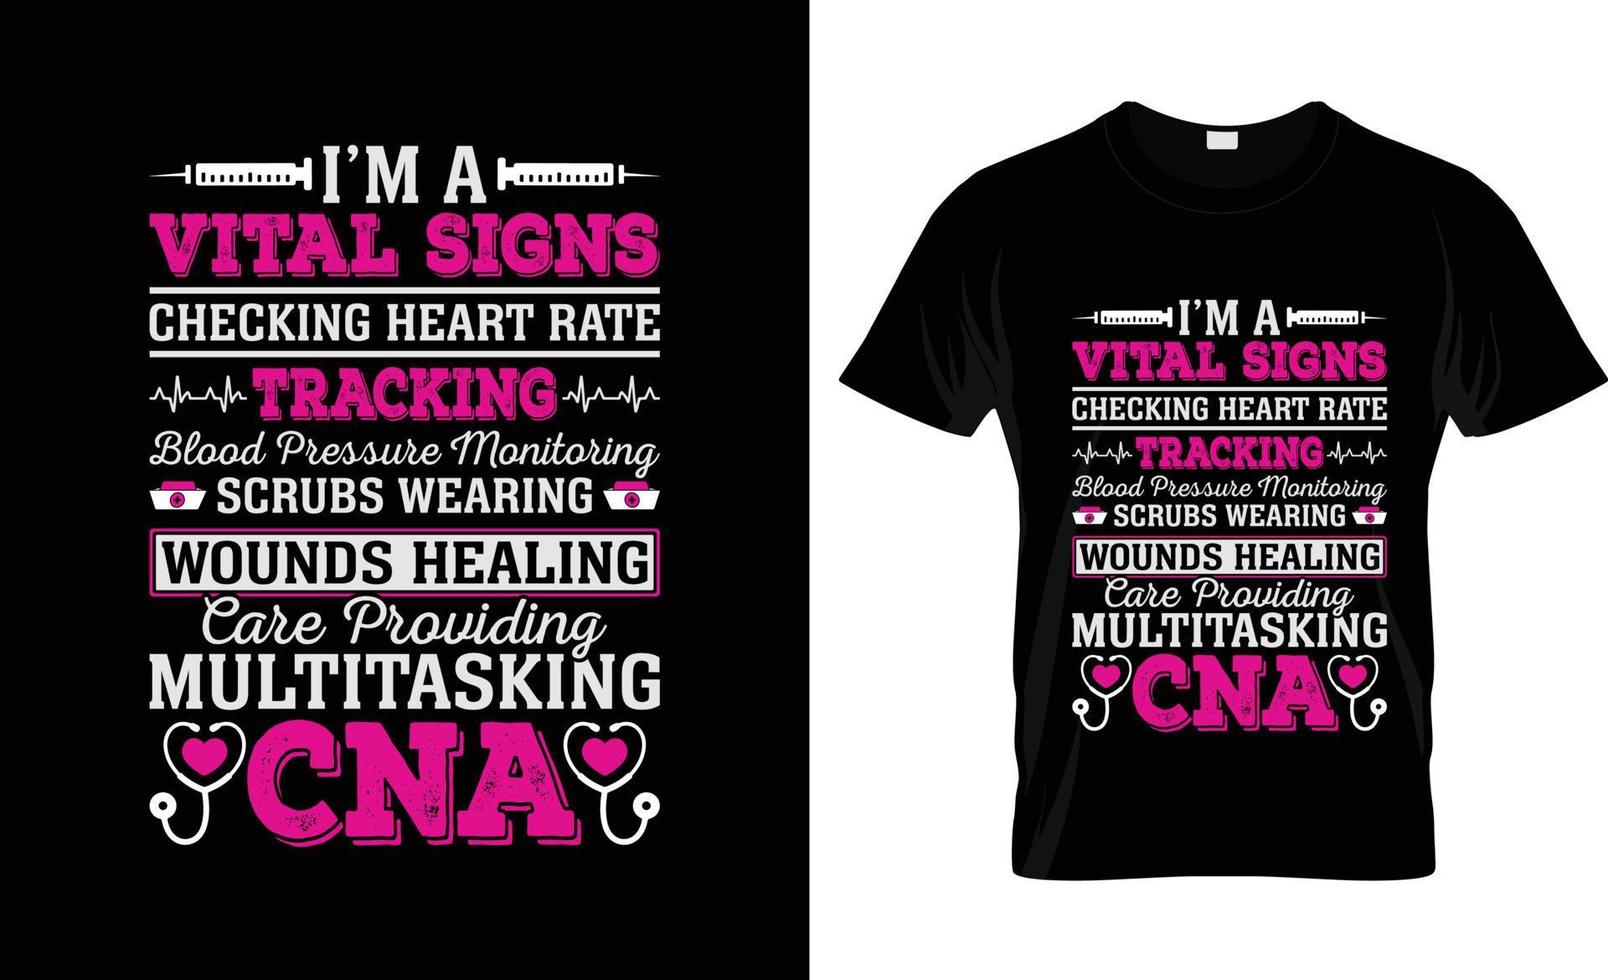 conception de t-shirt cna, slogan de t-shirt cna et conception de vêtements, typographie cna, vecteur cna, illustration cna